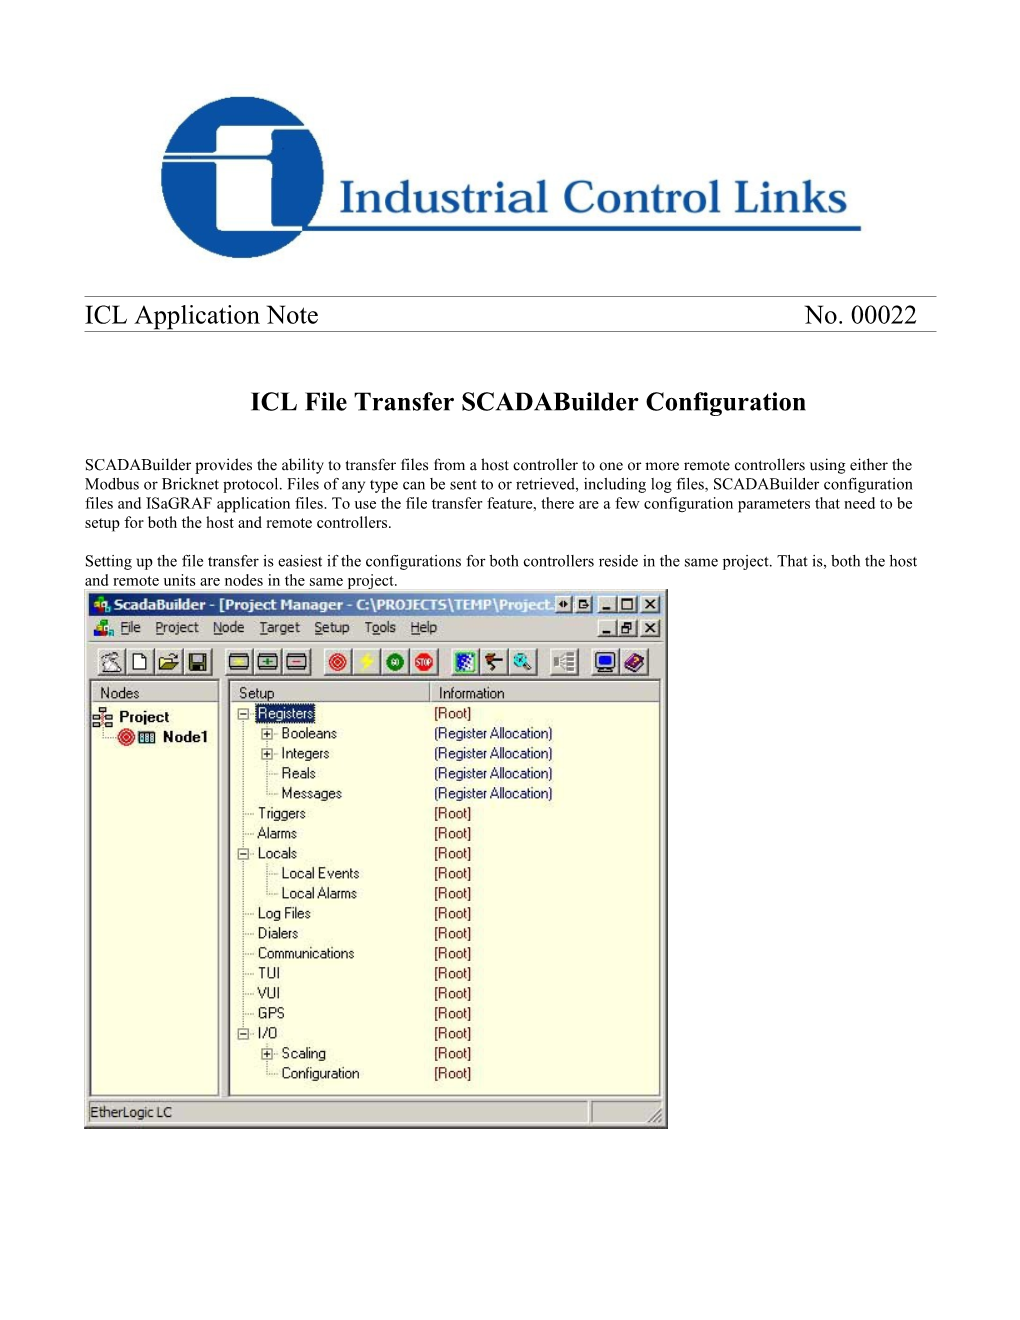 ICL File Transfer Scadabuilder Configuration